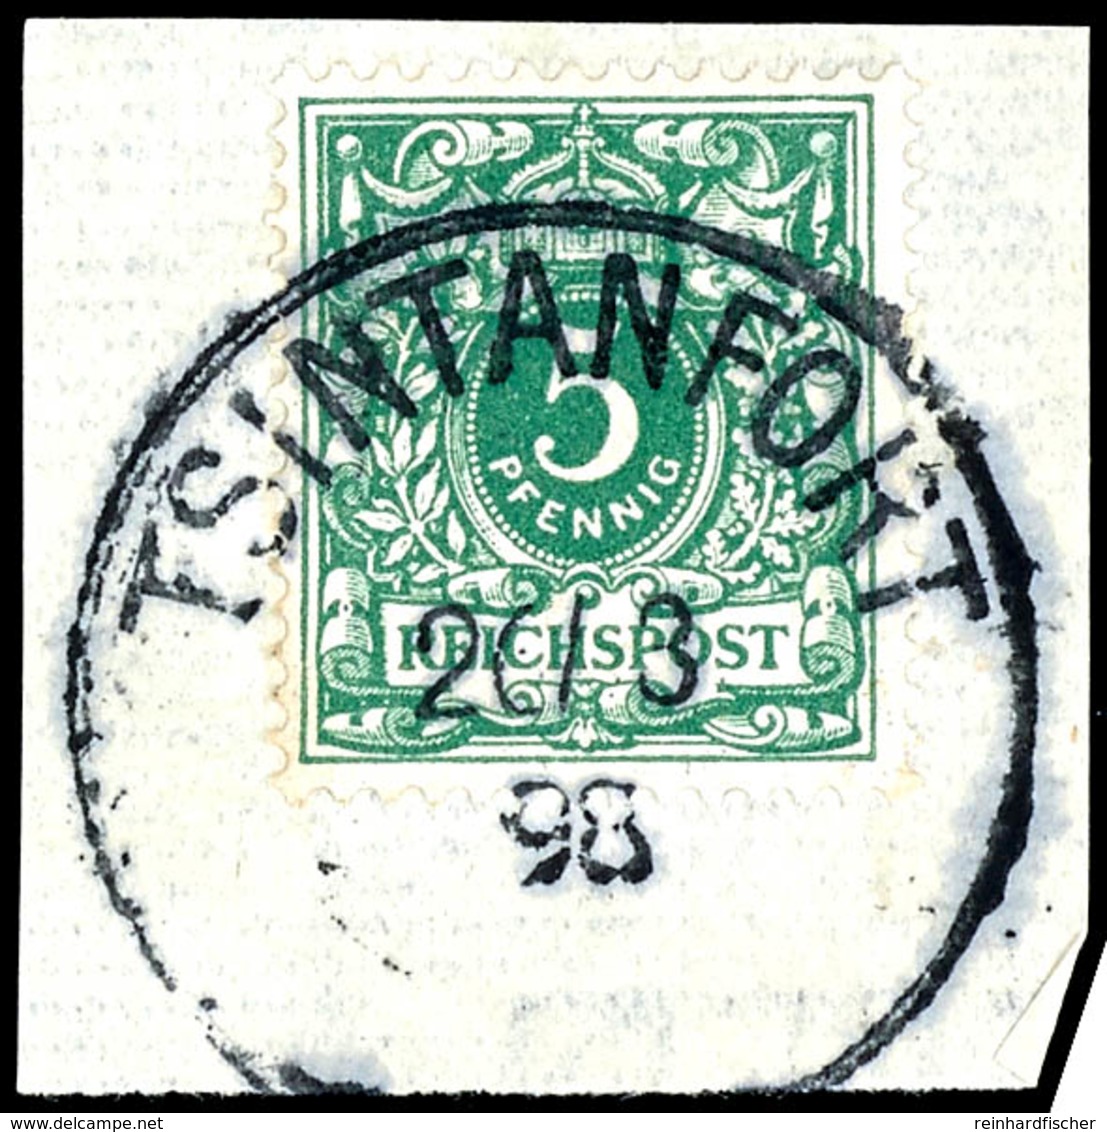 5 Pfennig Opalgrün, Schönes Briefstück, Stempel "TSINTANFORT", Michel/Steuer 300,-, Katalog: V46c BS - Kiaochow